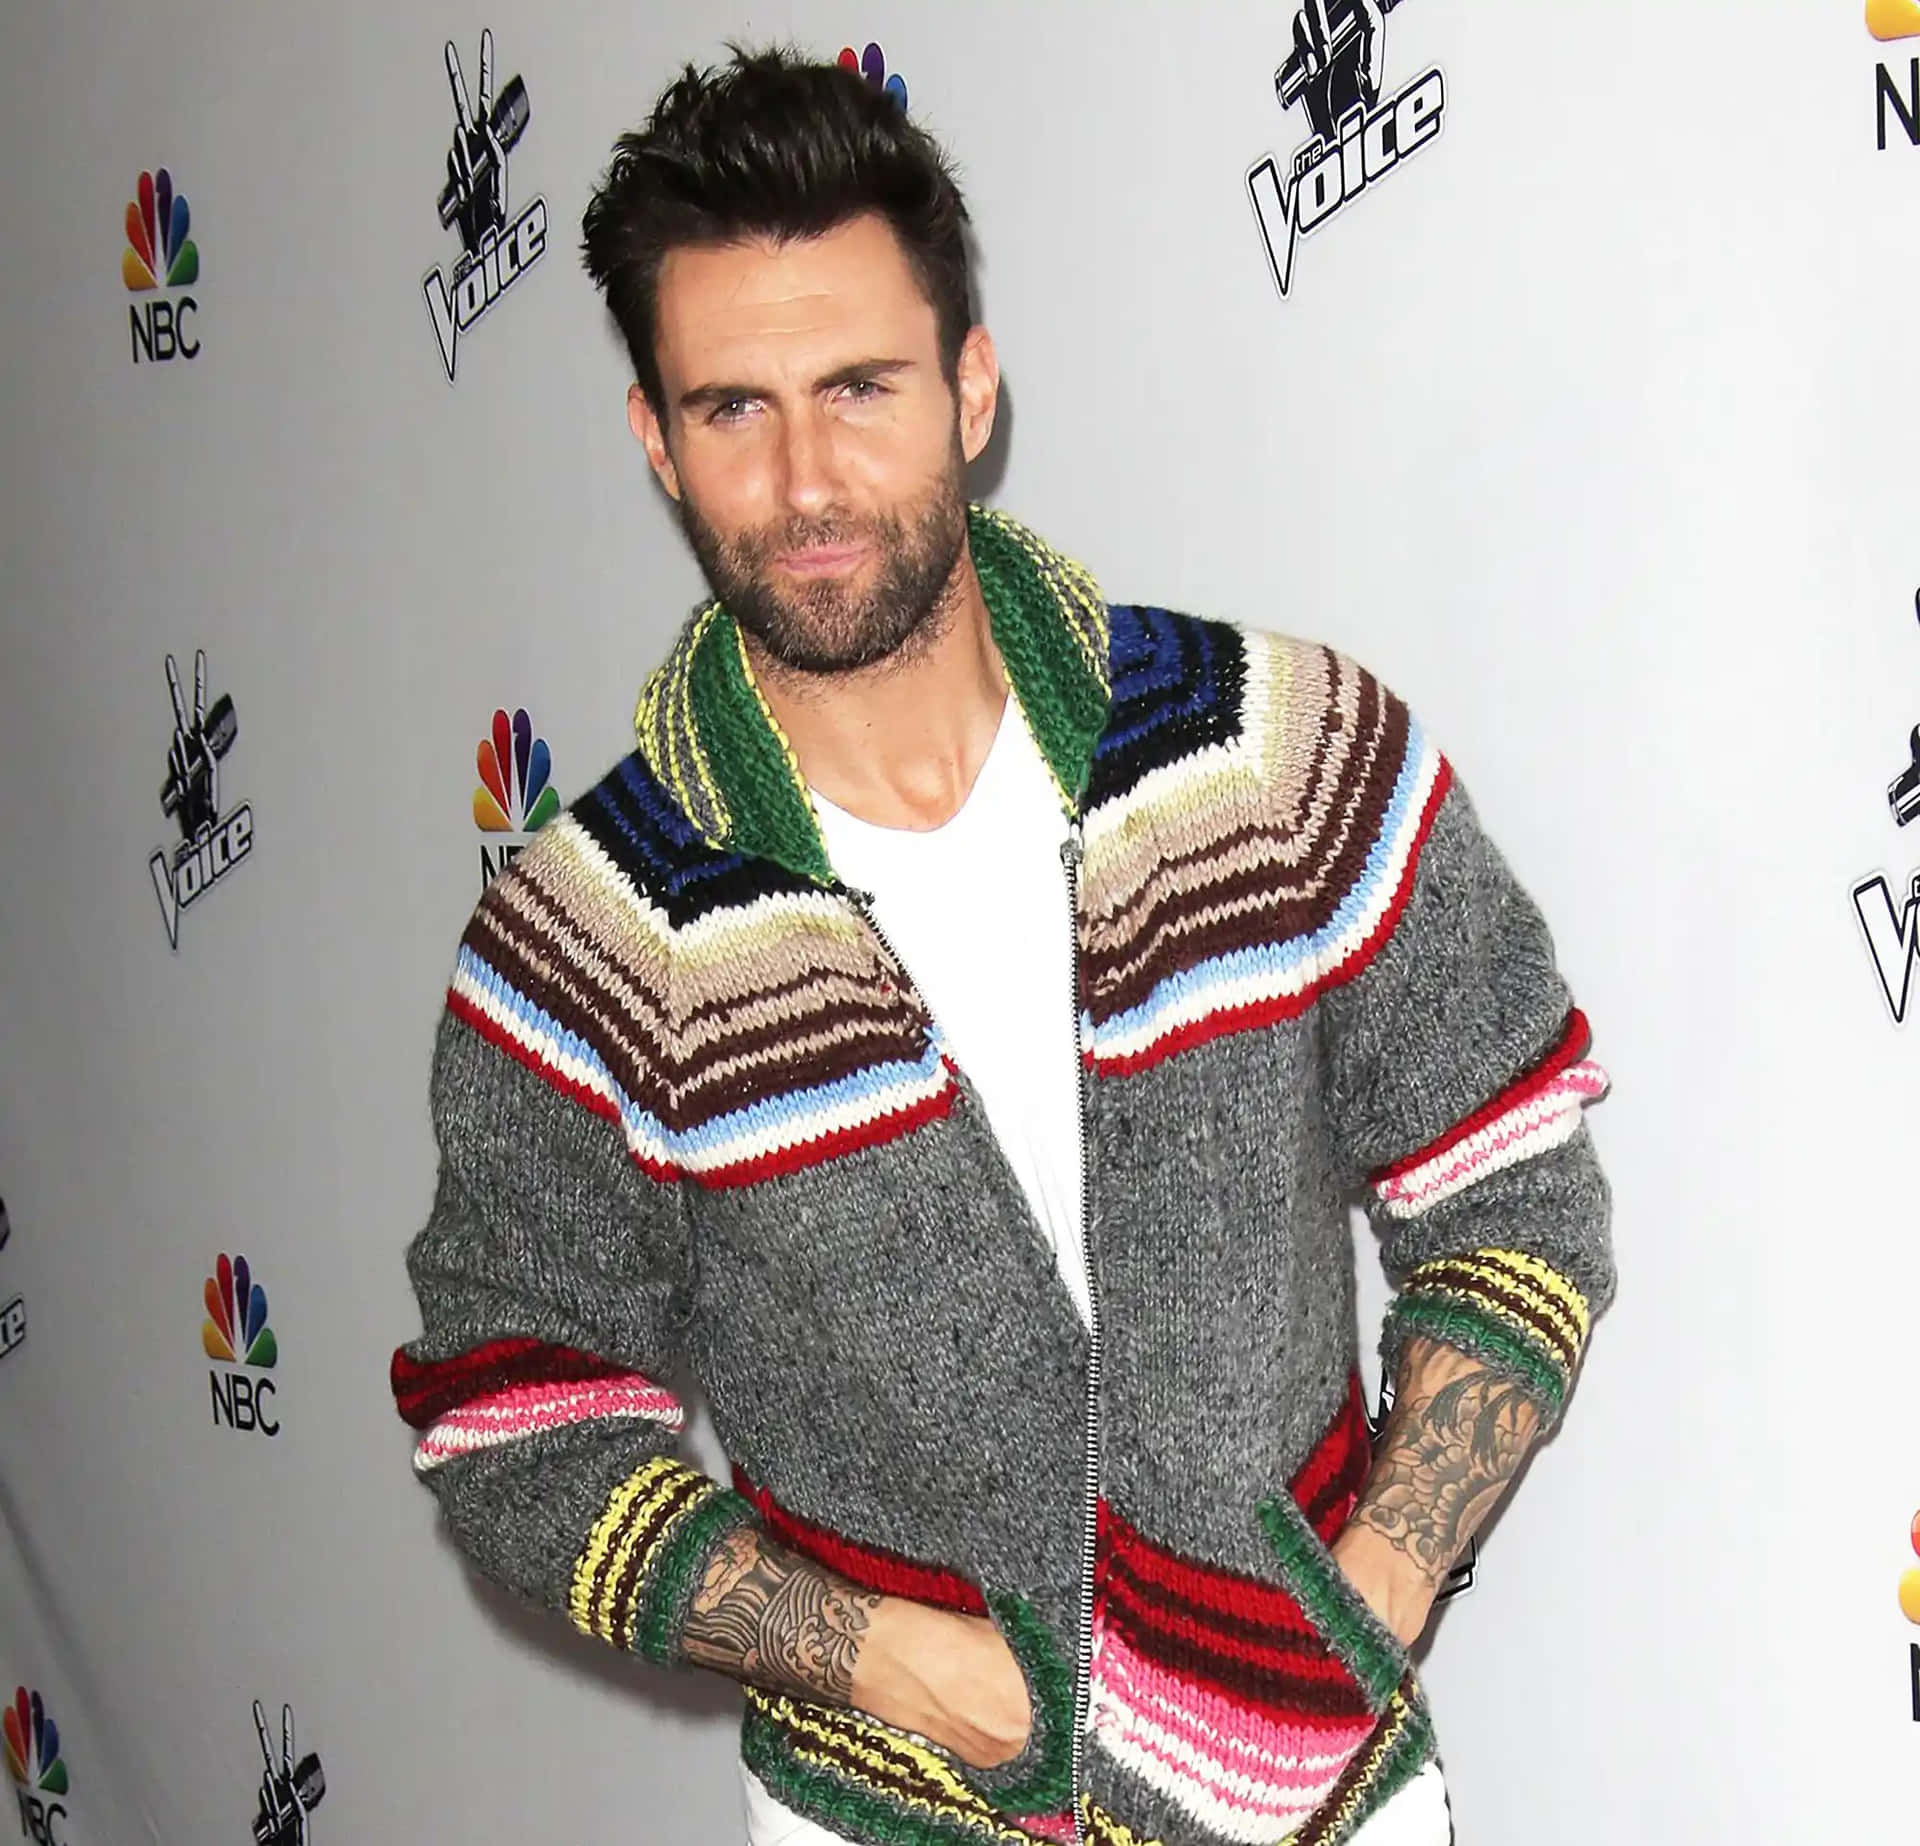 Adam Levine – Lead Singer of Maroon 5